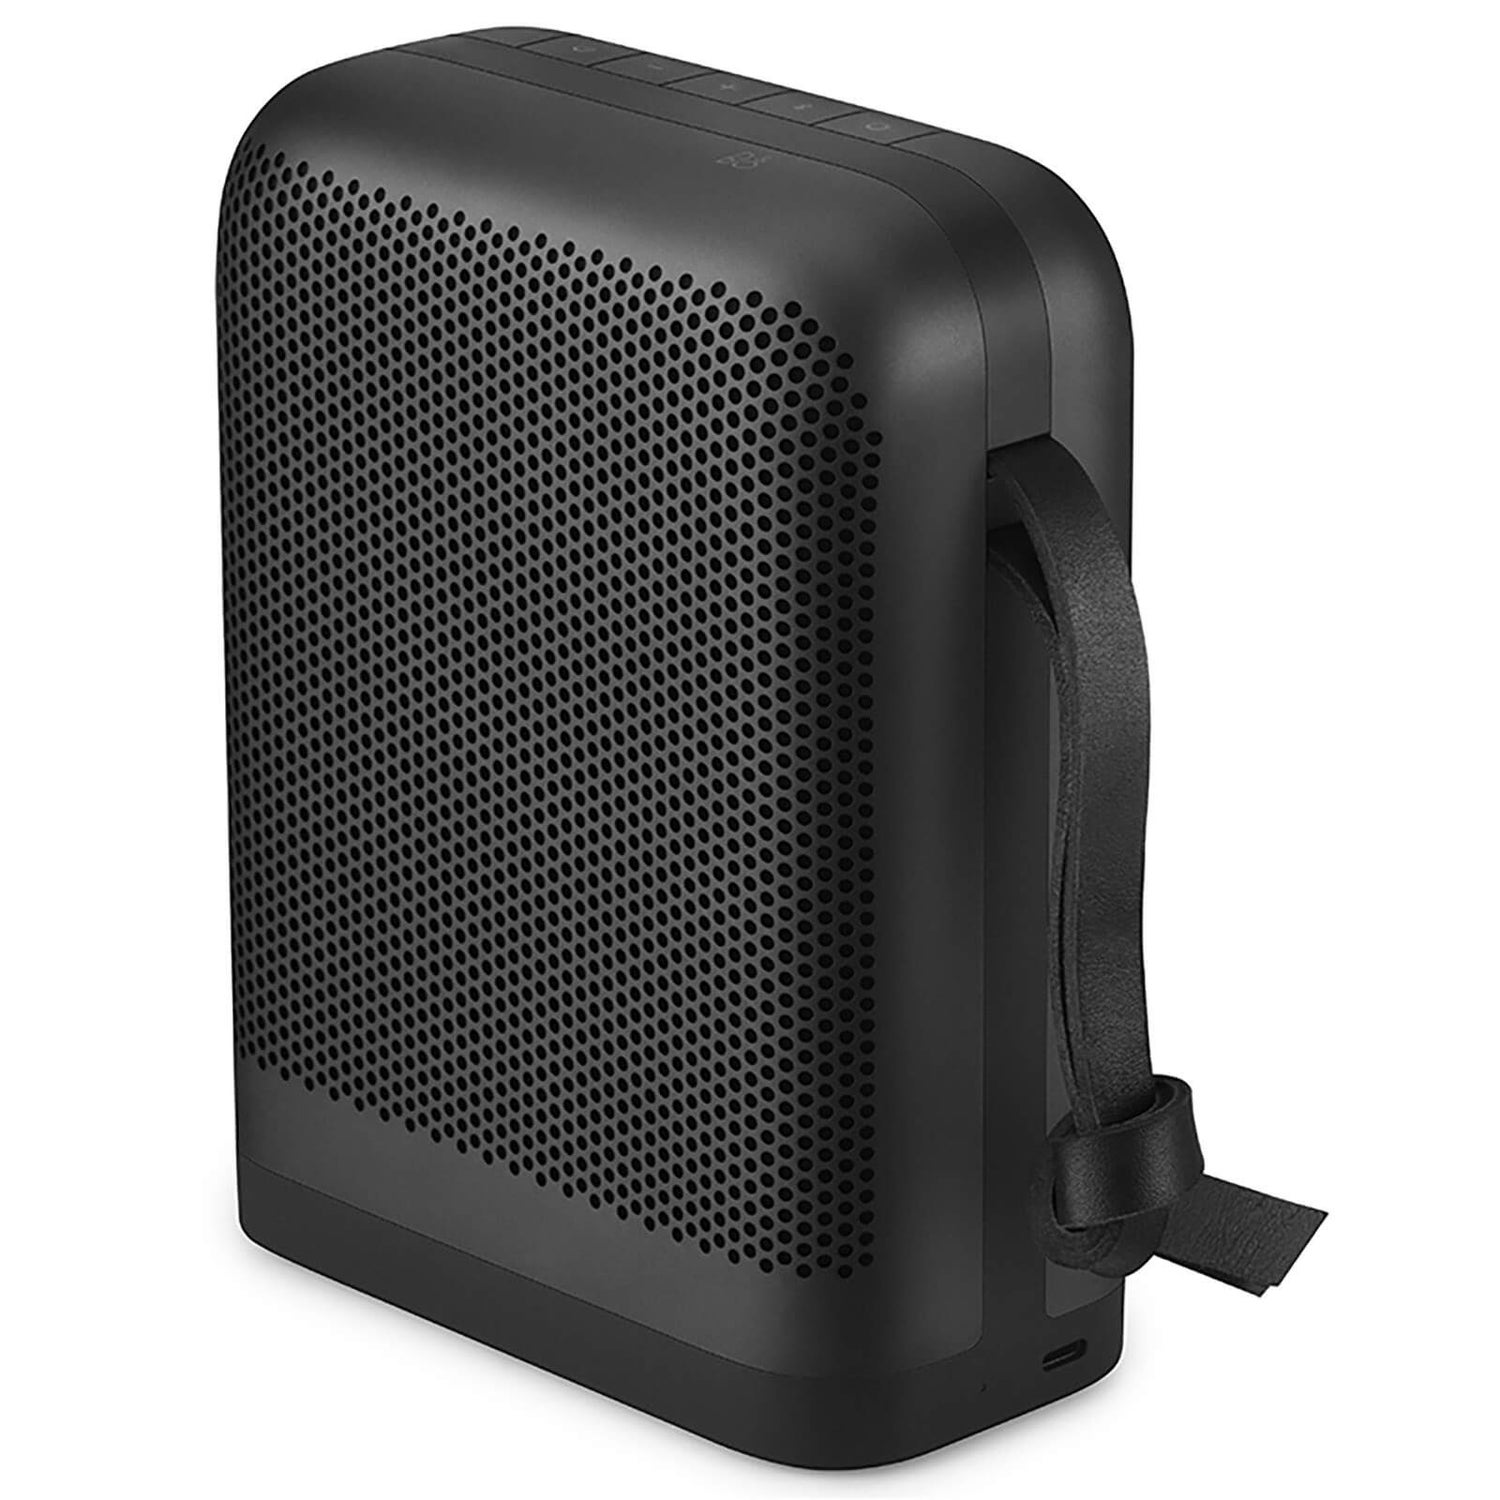 Bang & Olufsen P6 Portable Bluetooth Speaker - Black